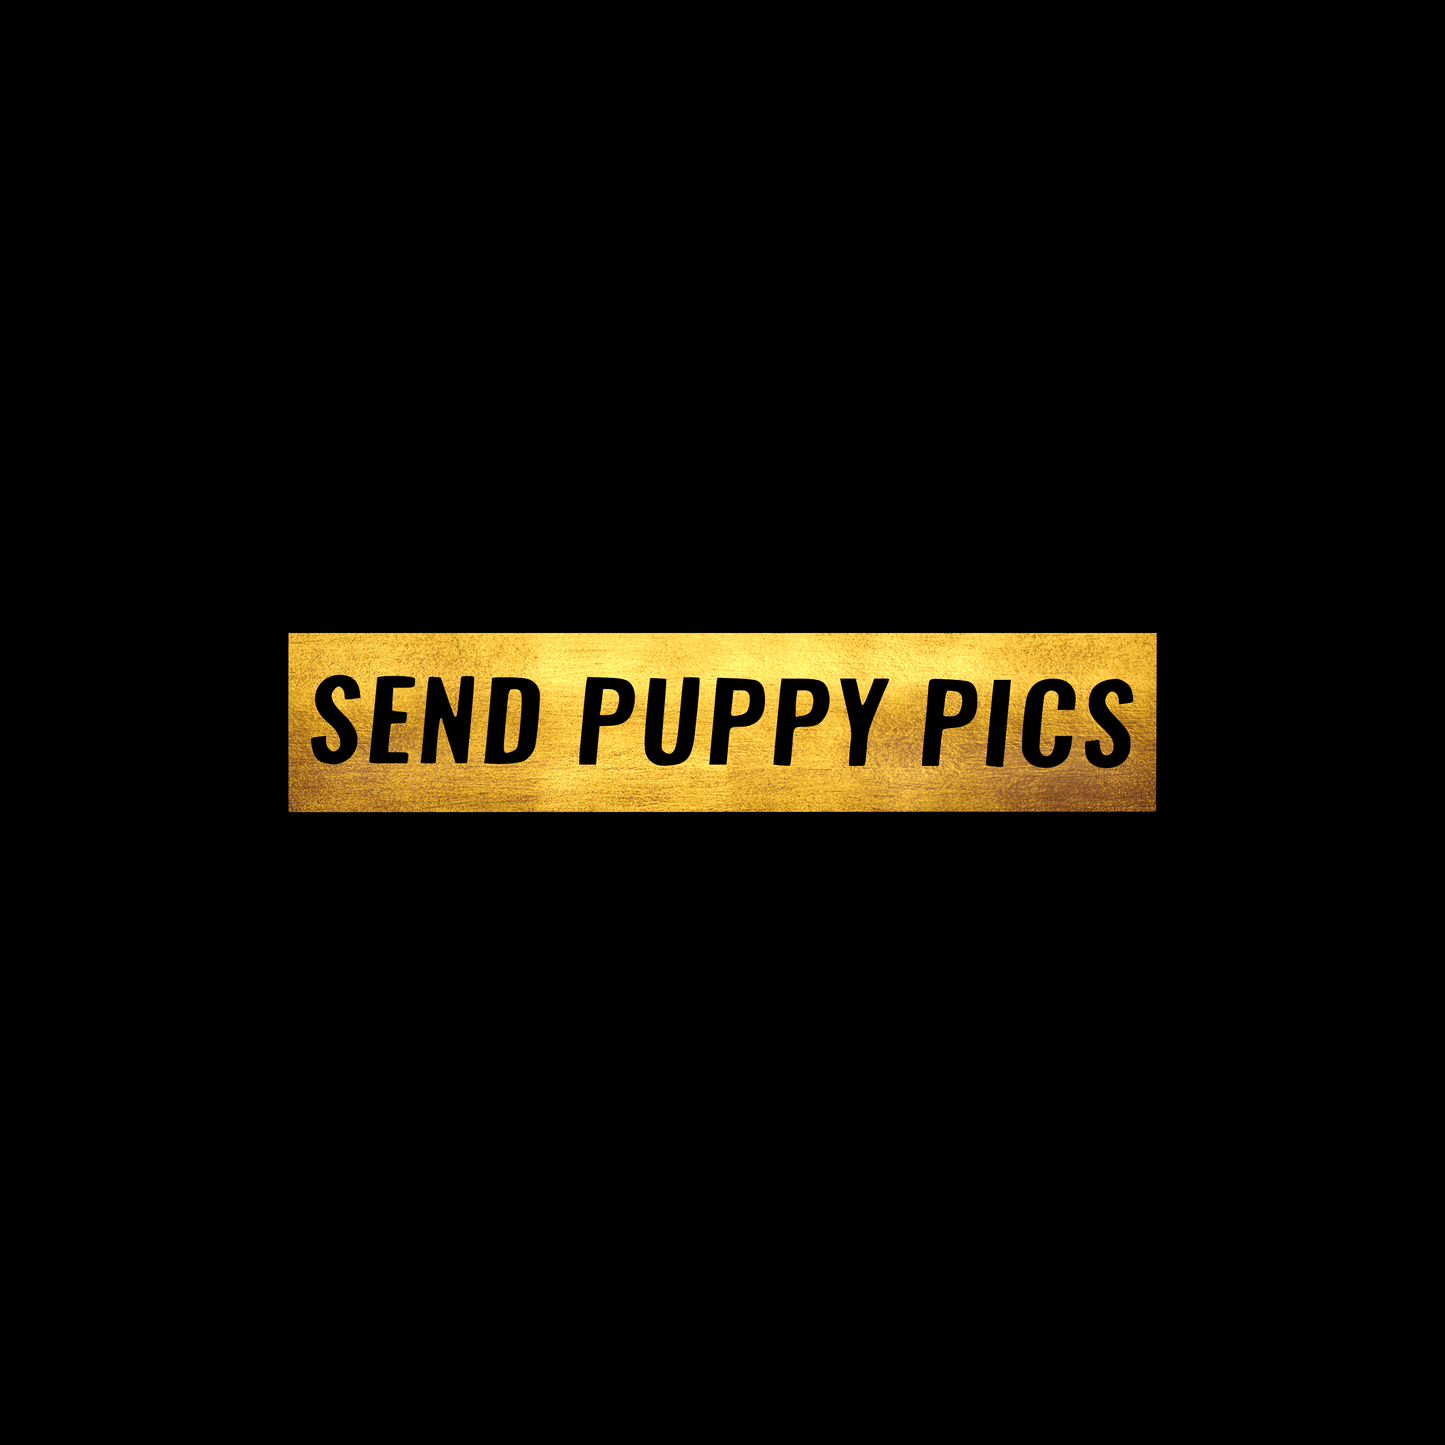 send puppy pics sticker decal